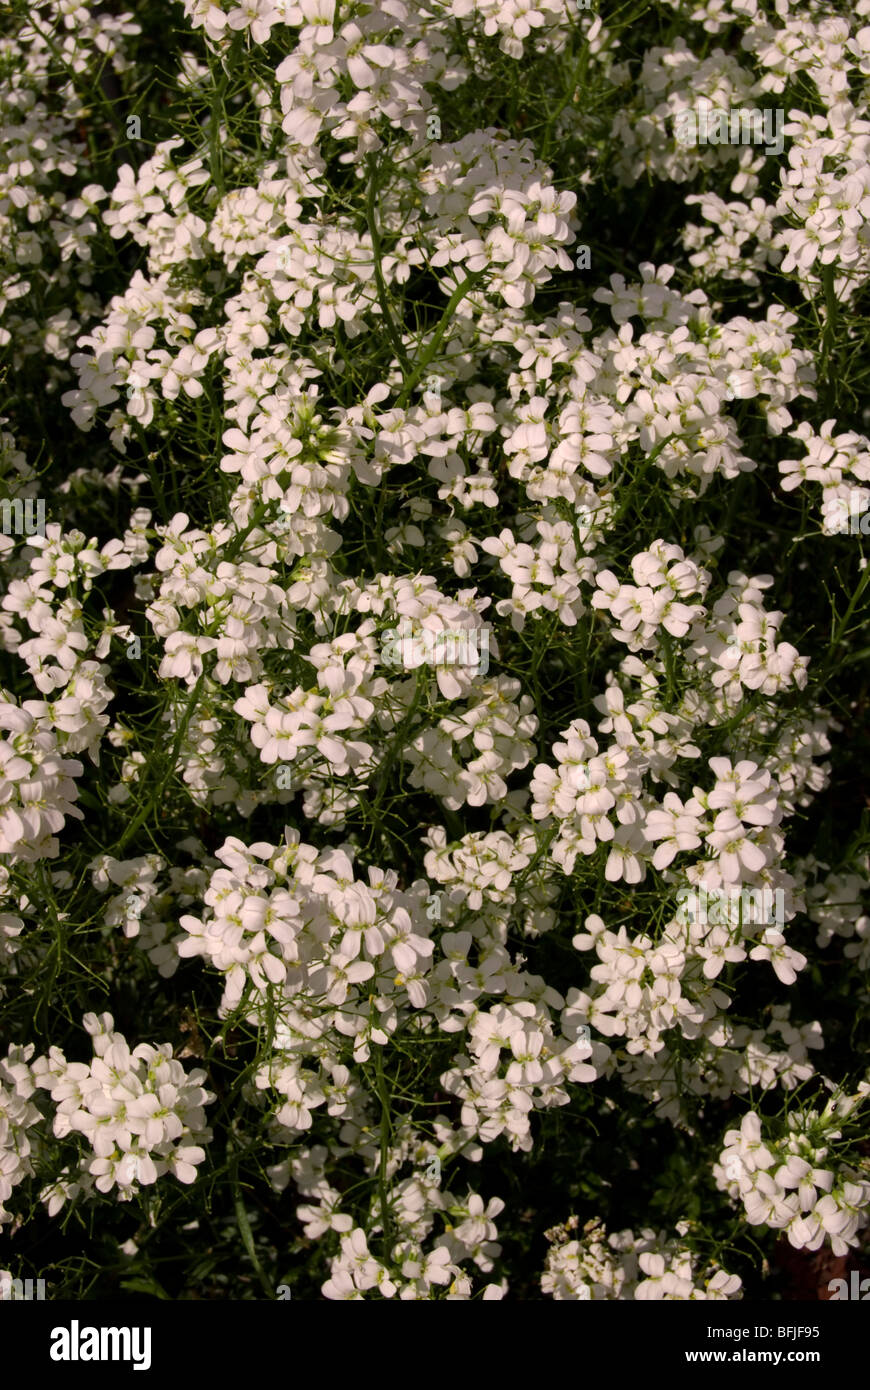 Arabis soyeri ssp jacquinii Stock Photo